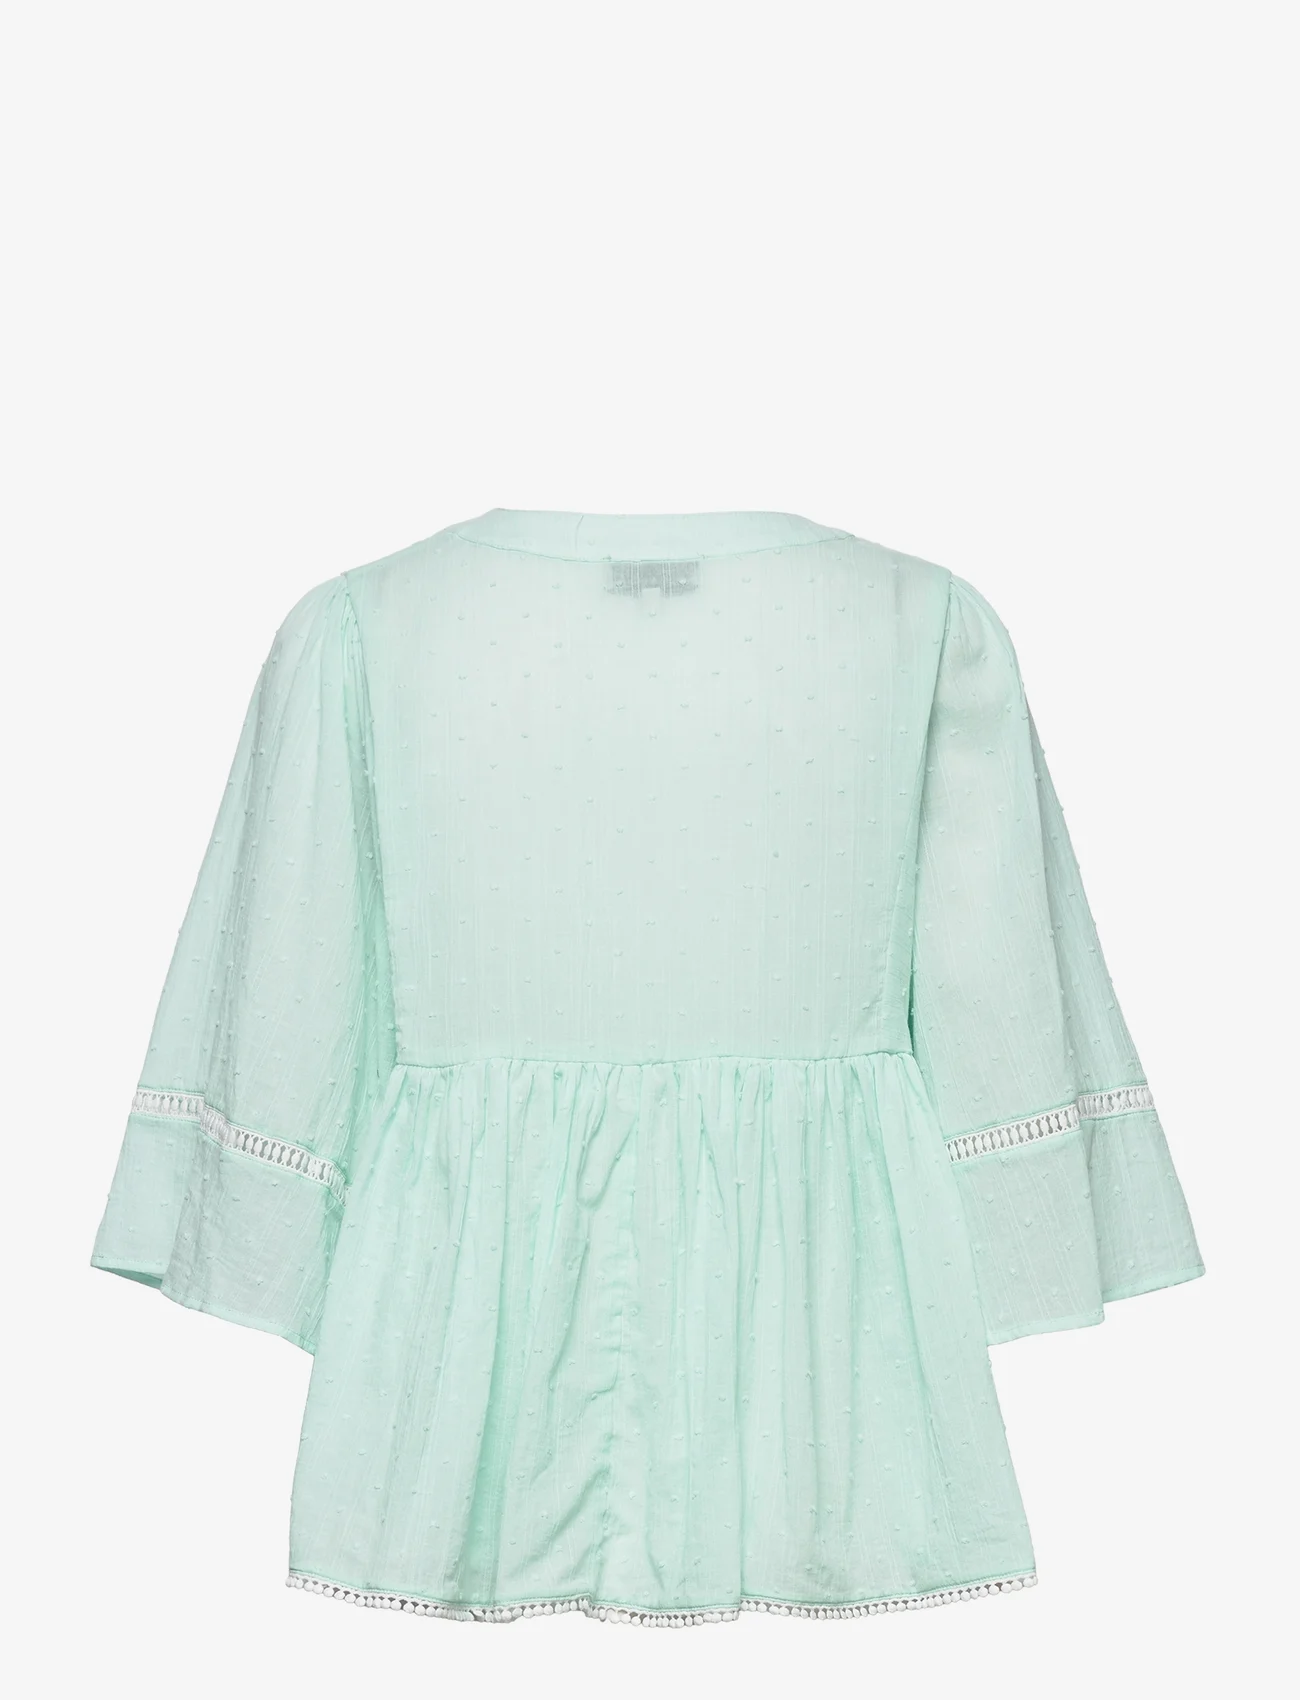 Malina - Serafina blouse - langärmlige blusen - aqua - 1